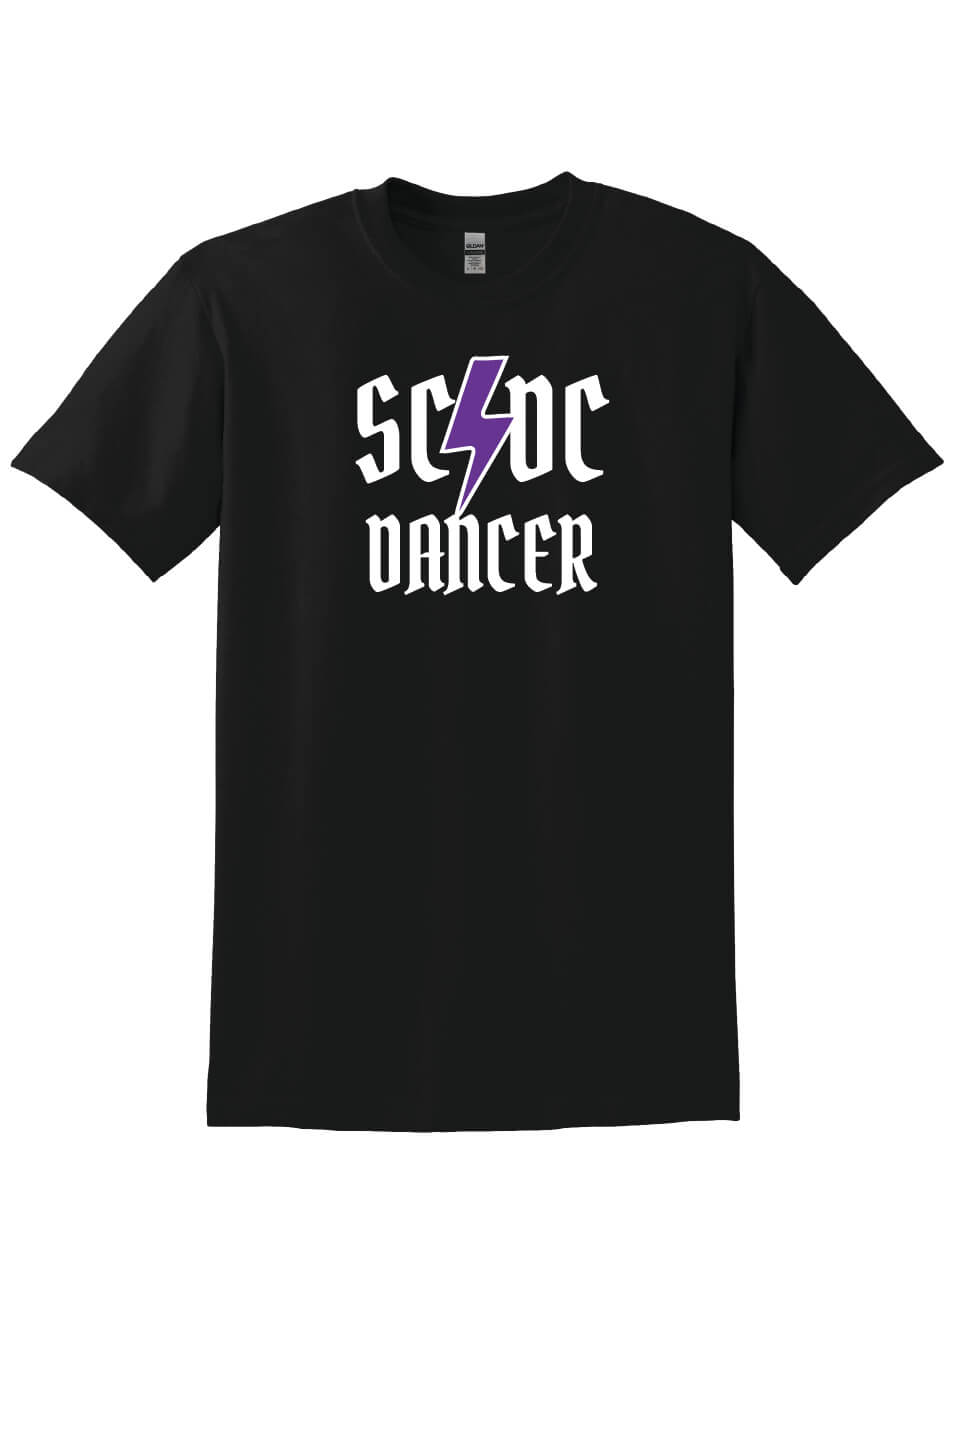 SCDC Short Sleeve T-Shirt (Youth) black